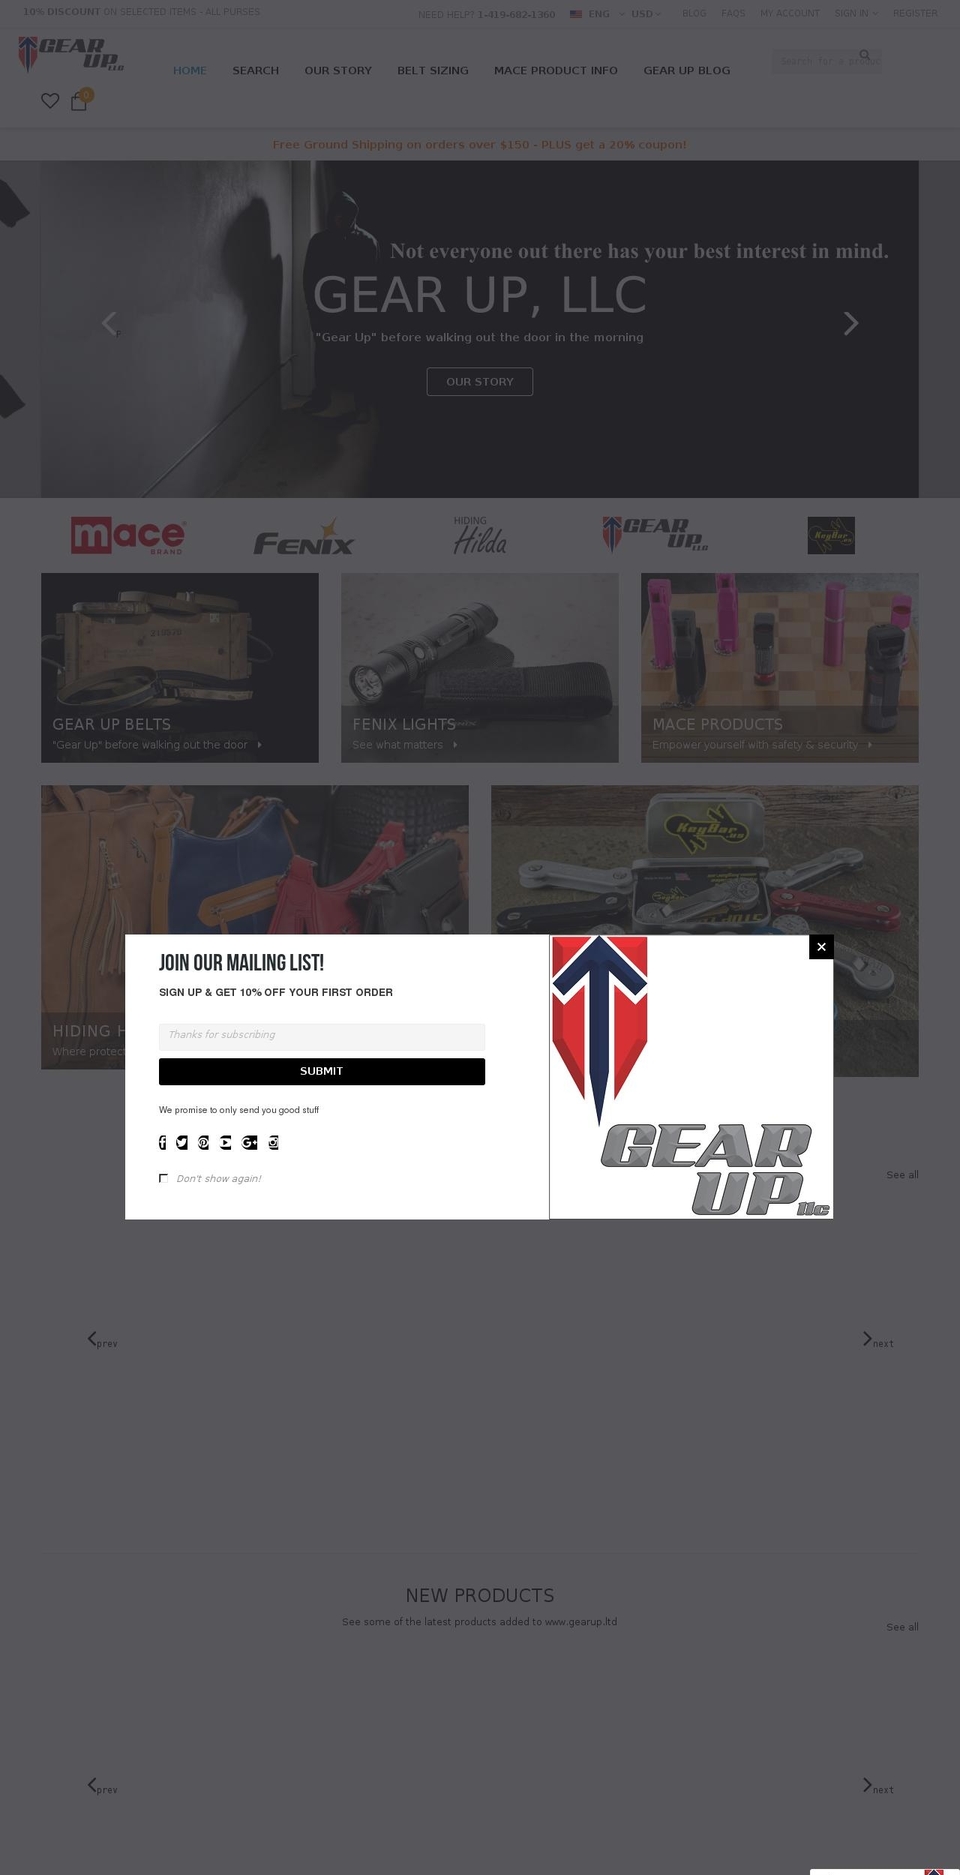 gearup.ltd shopify website screenshot